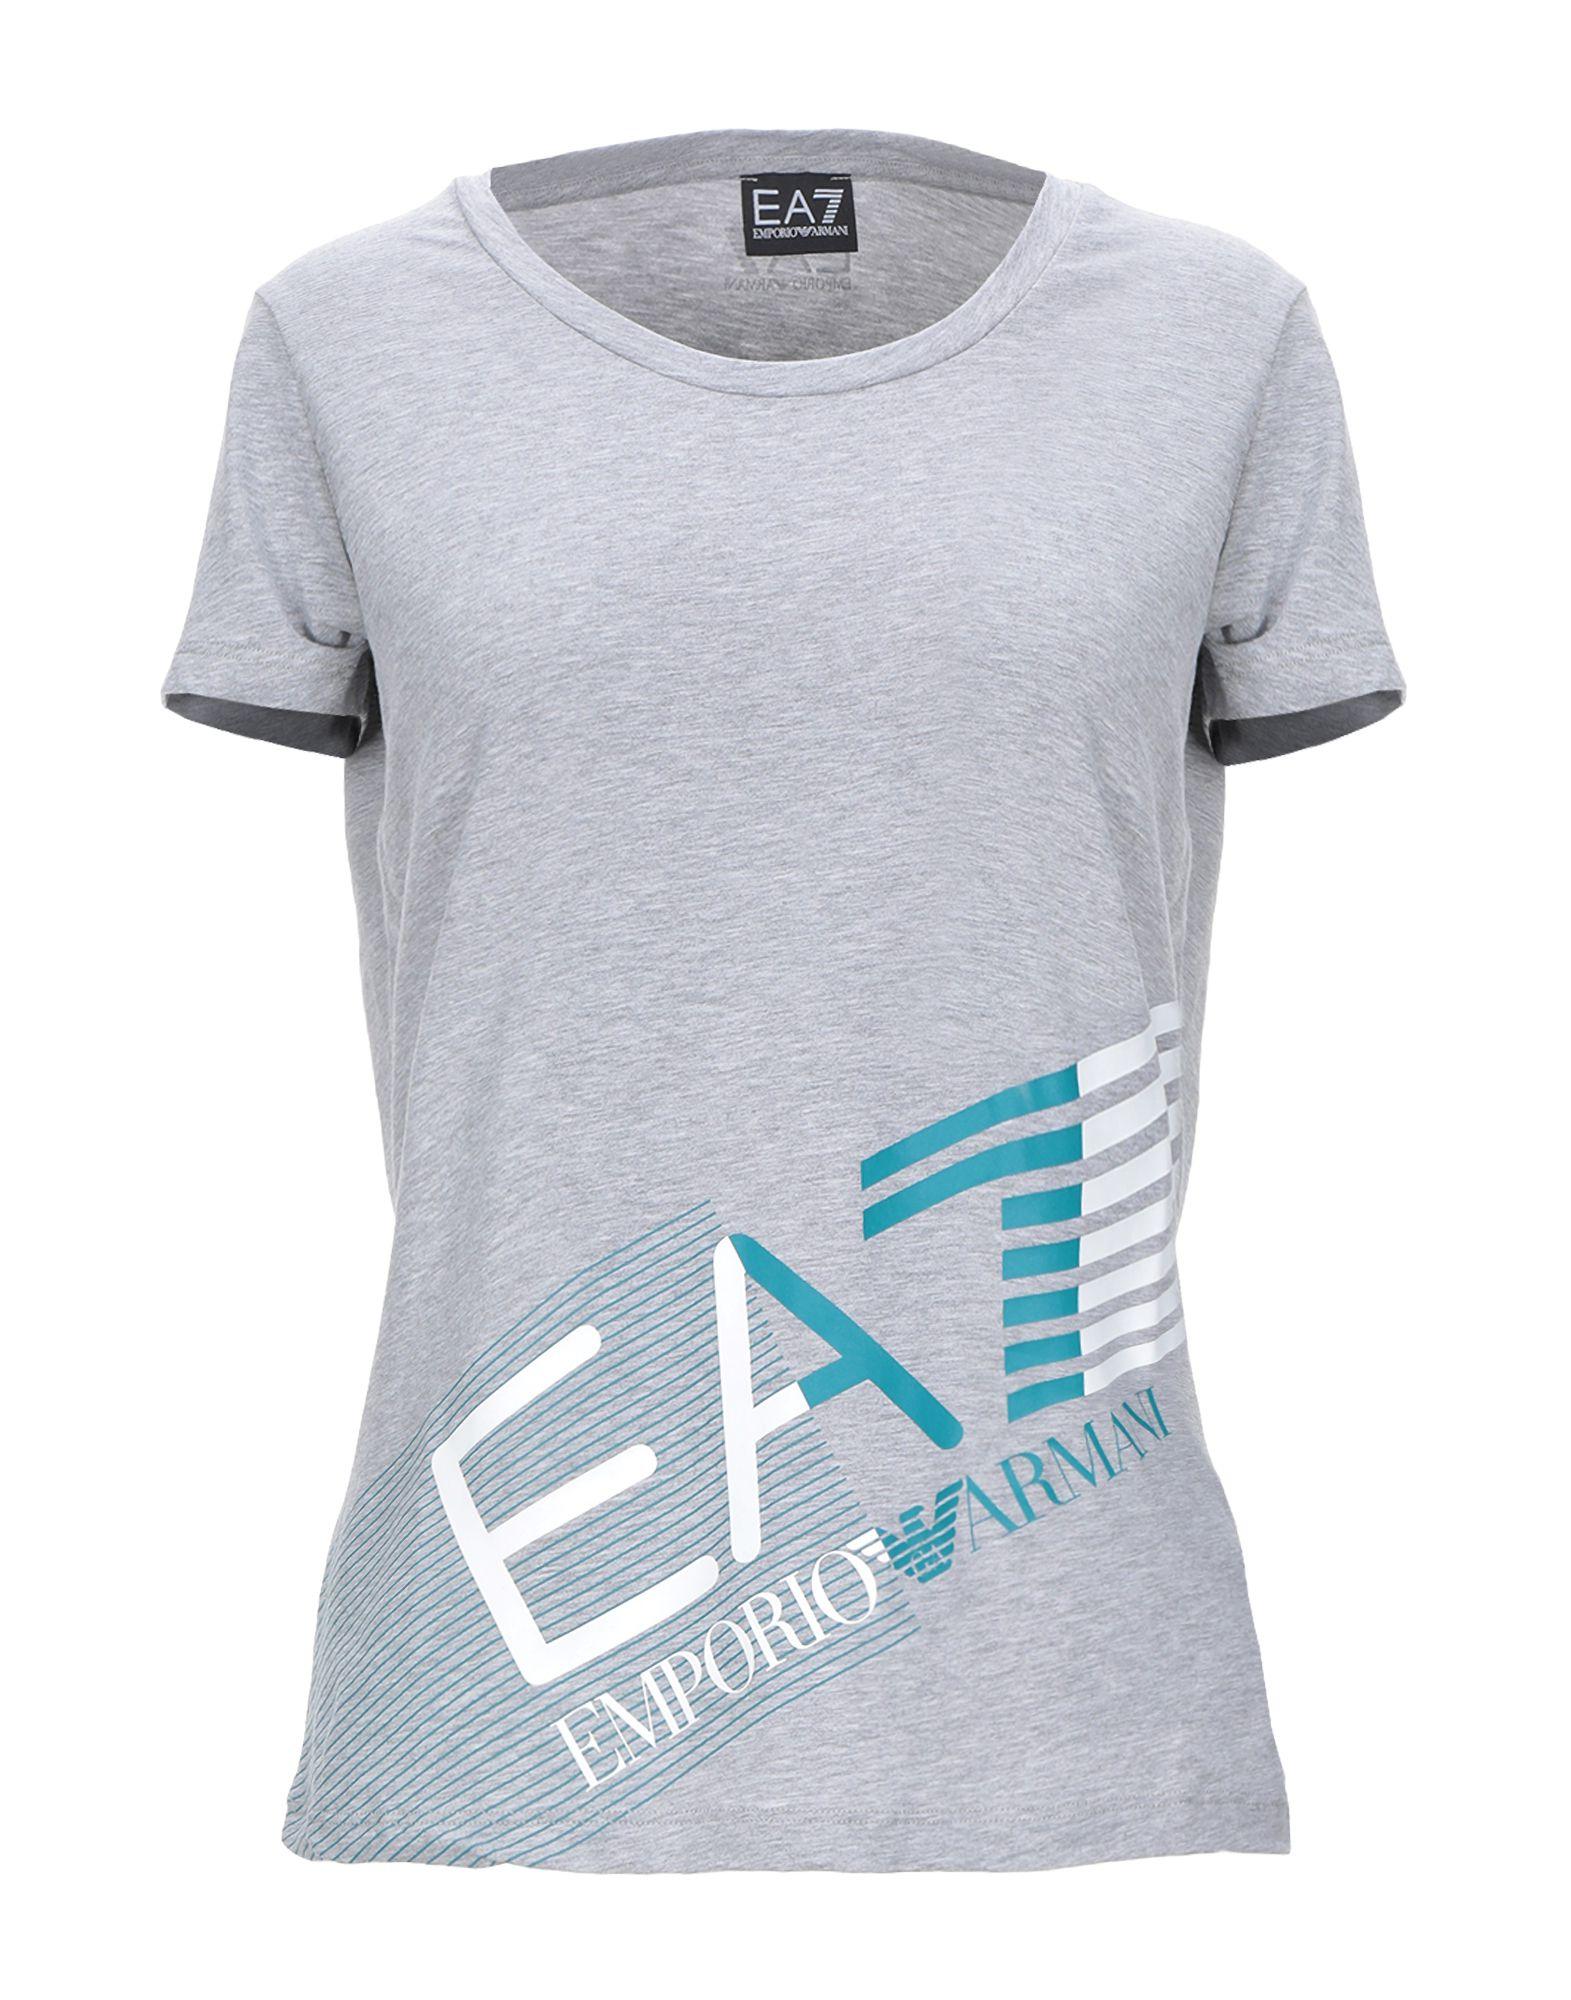 EA7 Cotton T-shirt in Light Grey (Gray) - Lyst